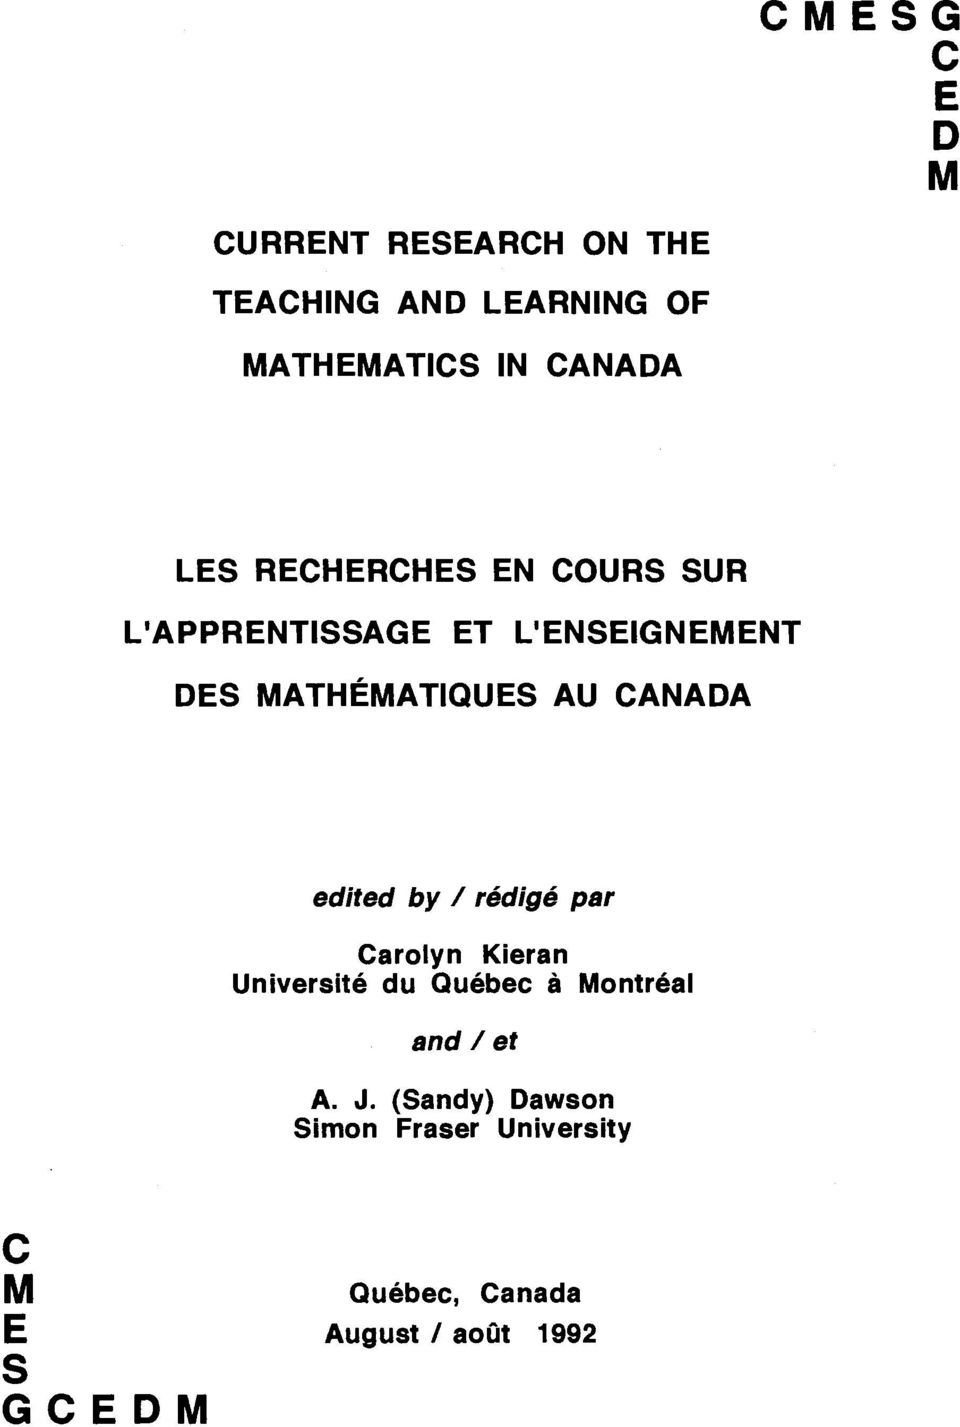 CANADA edited by I redige par Carolyn Kieran Universite du Quebec a Montreal and I et